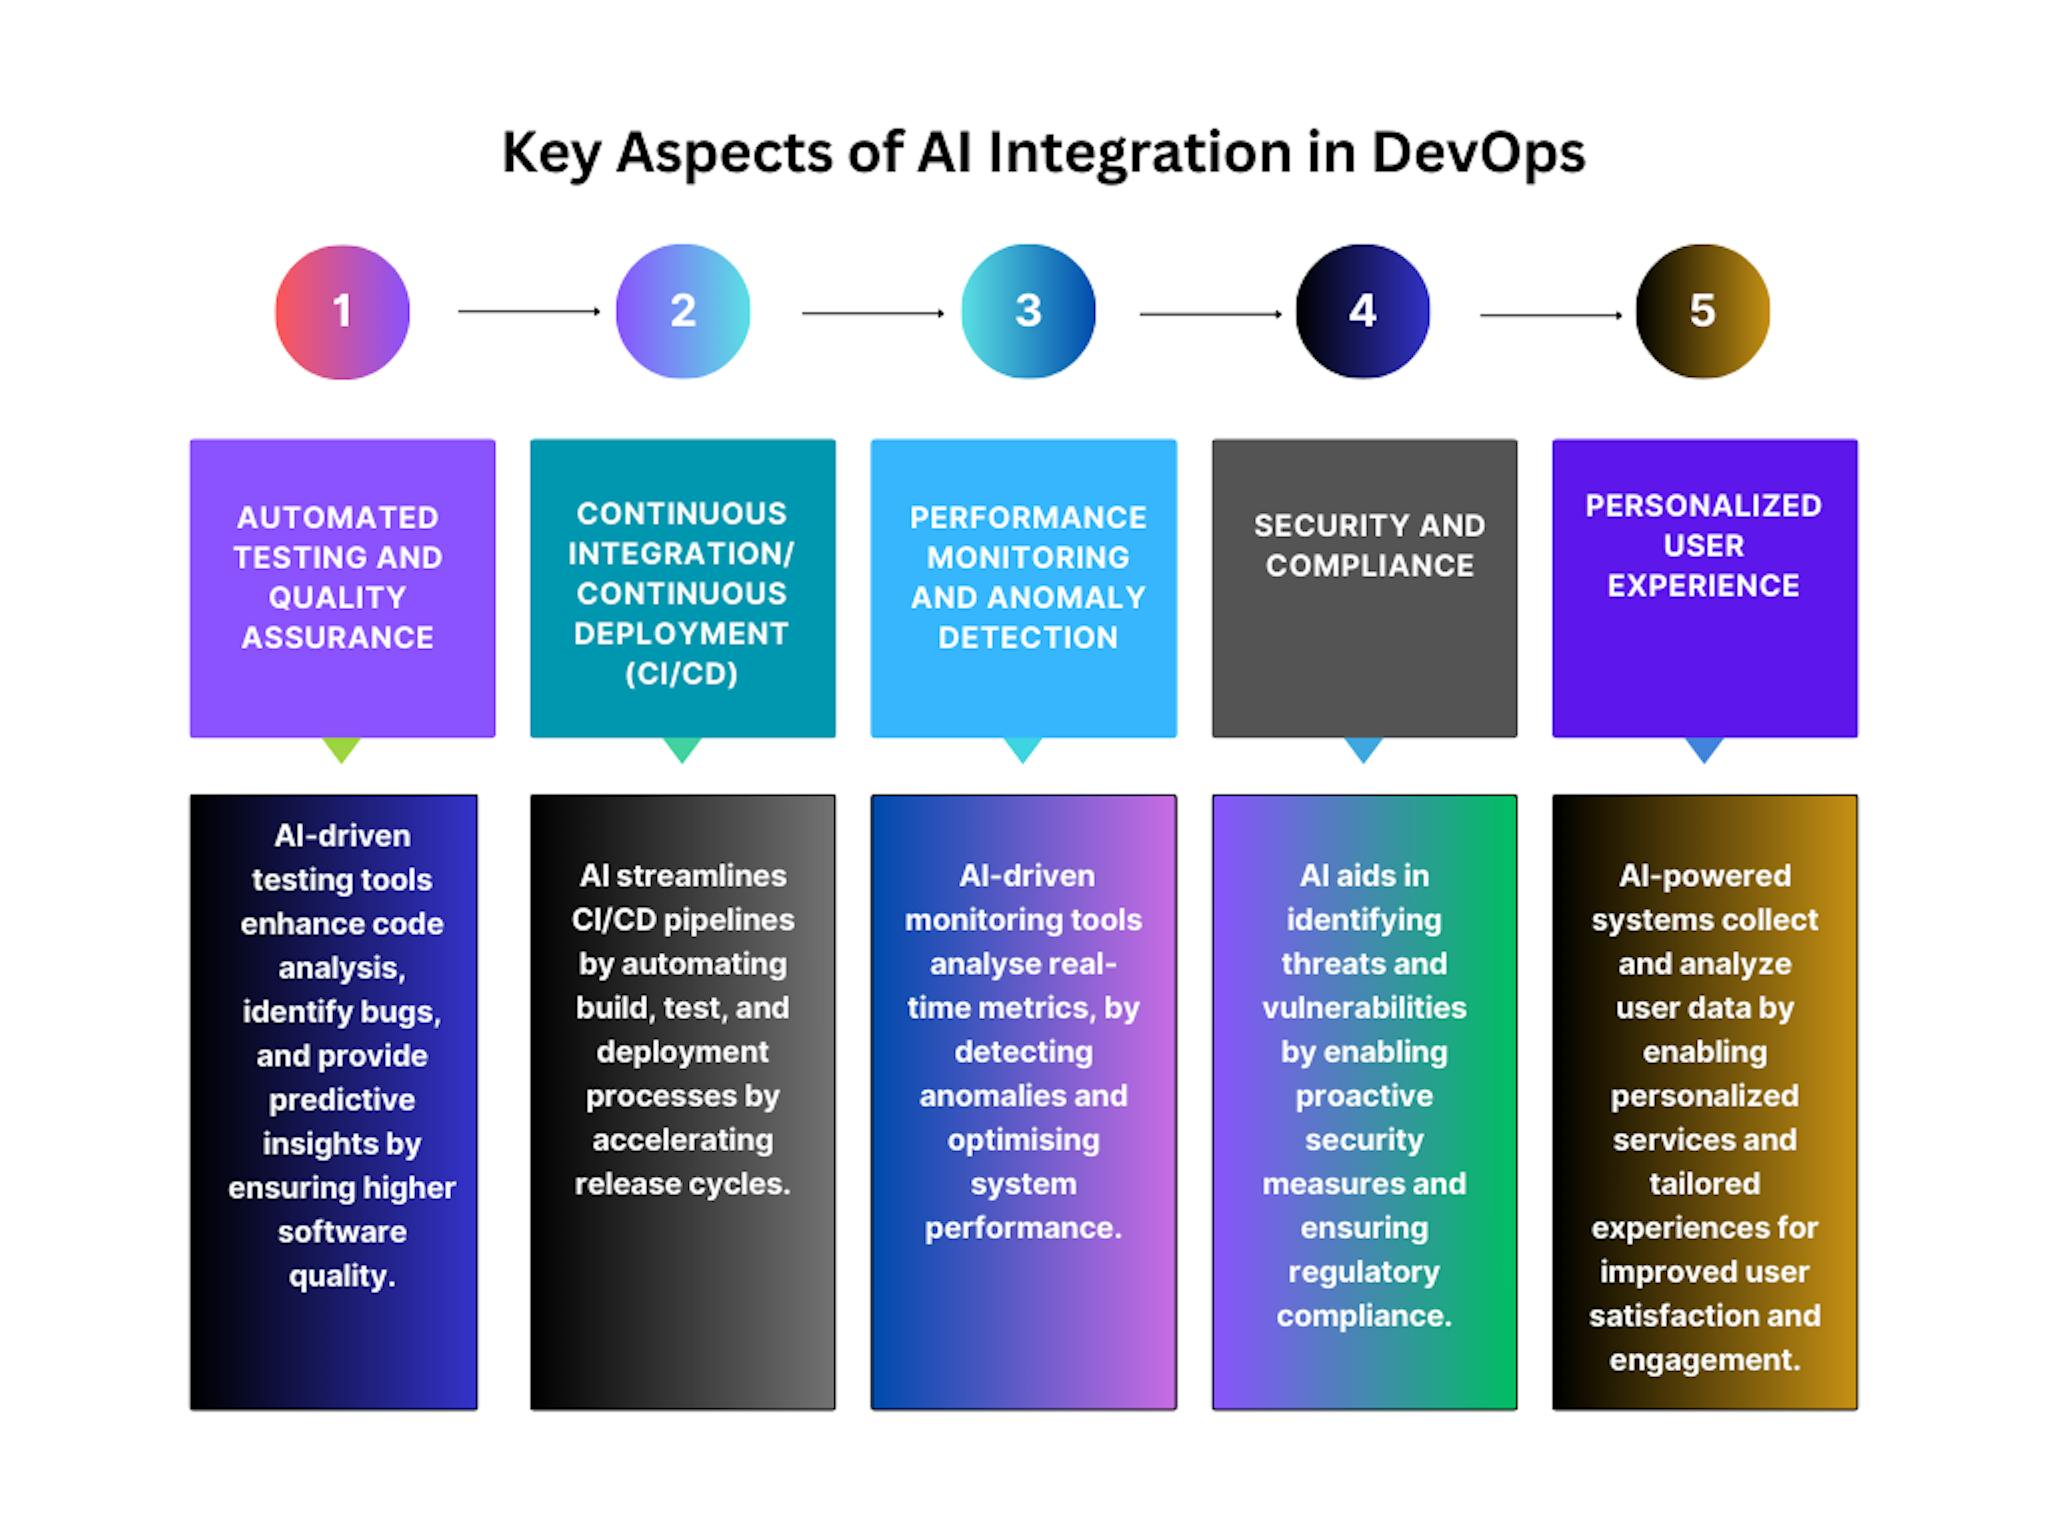 Figure: Aspects of AI Integration in DevOps